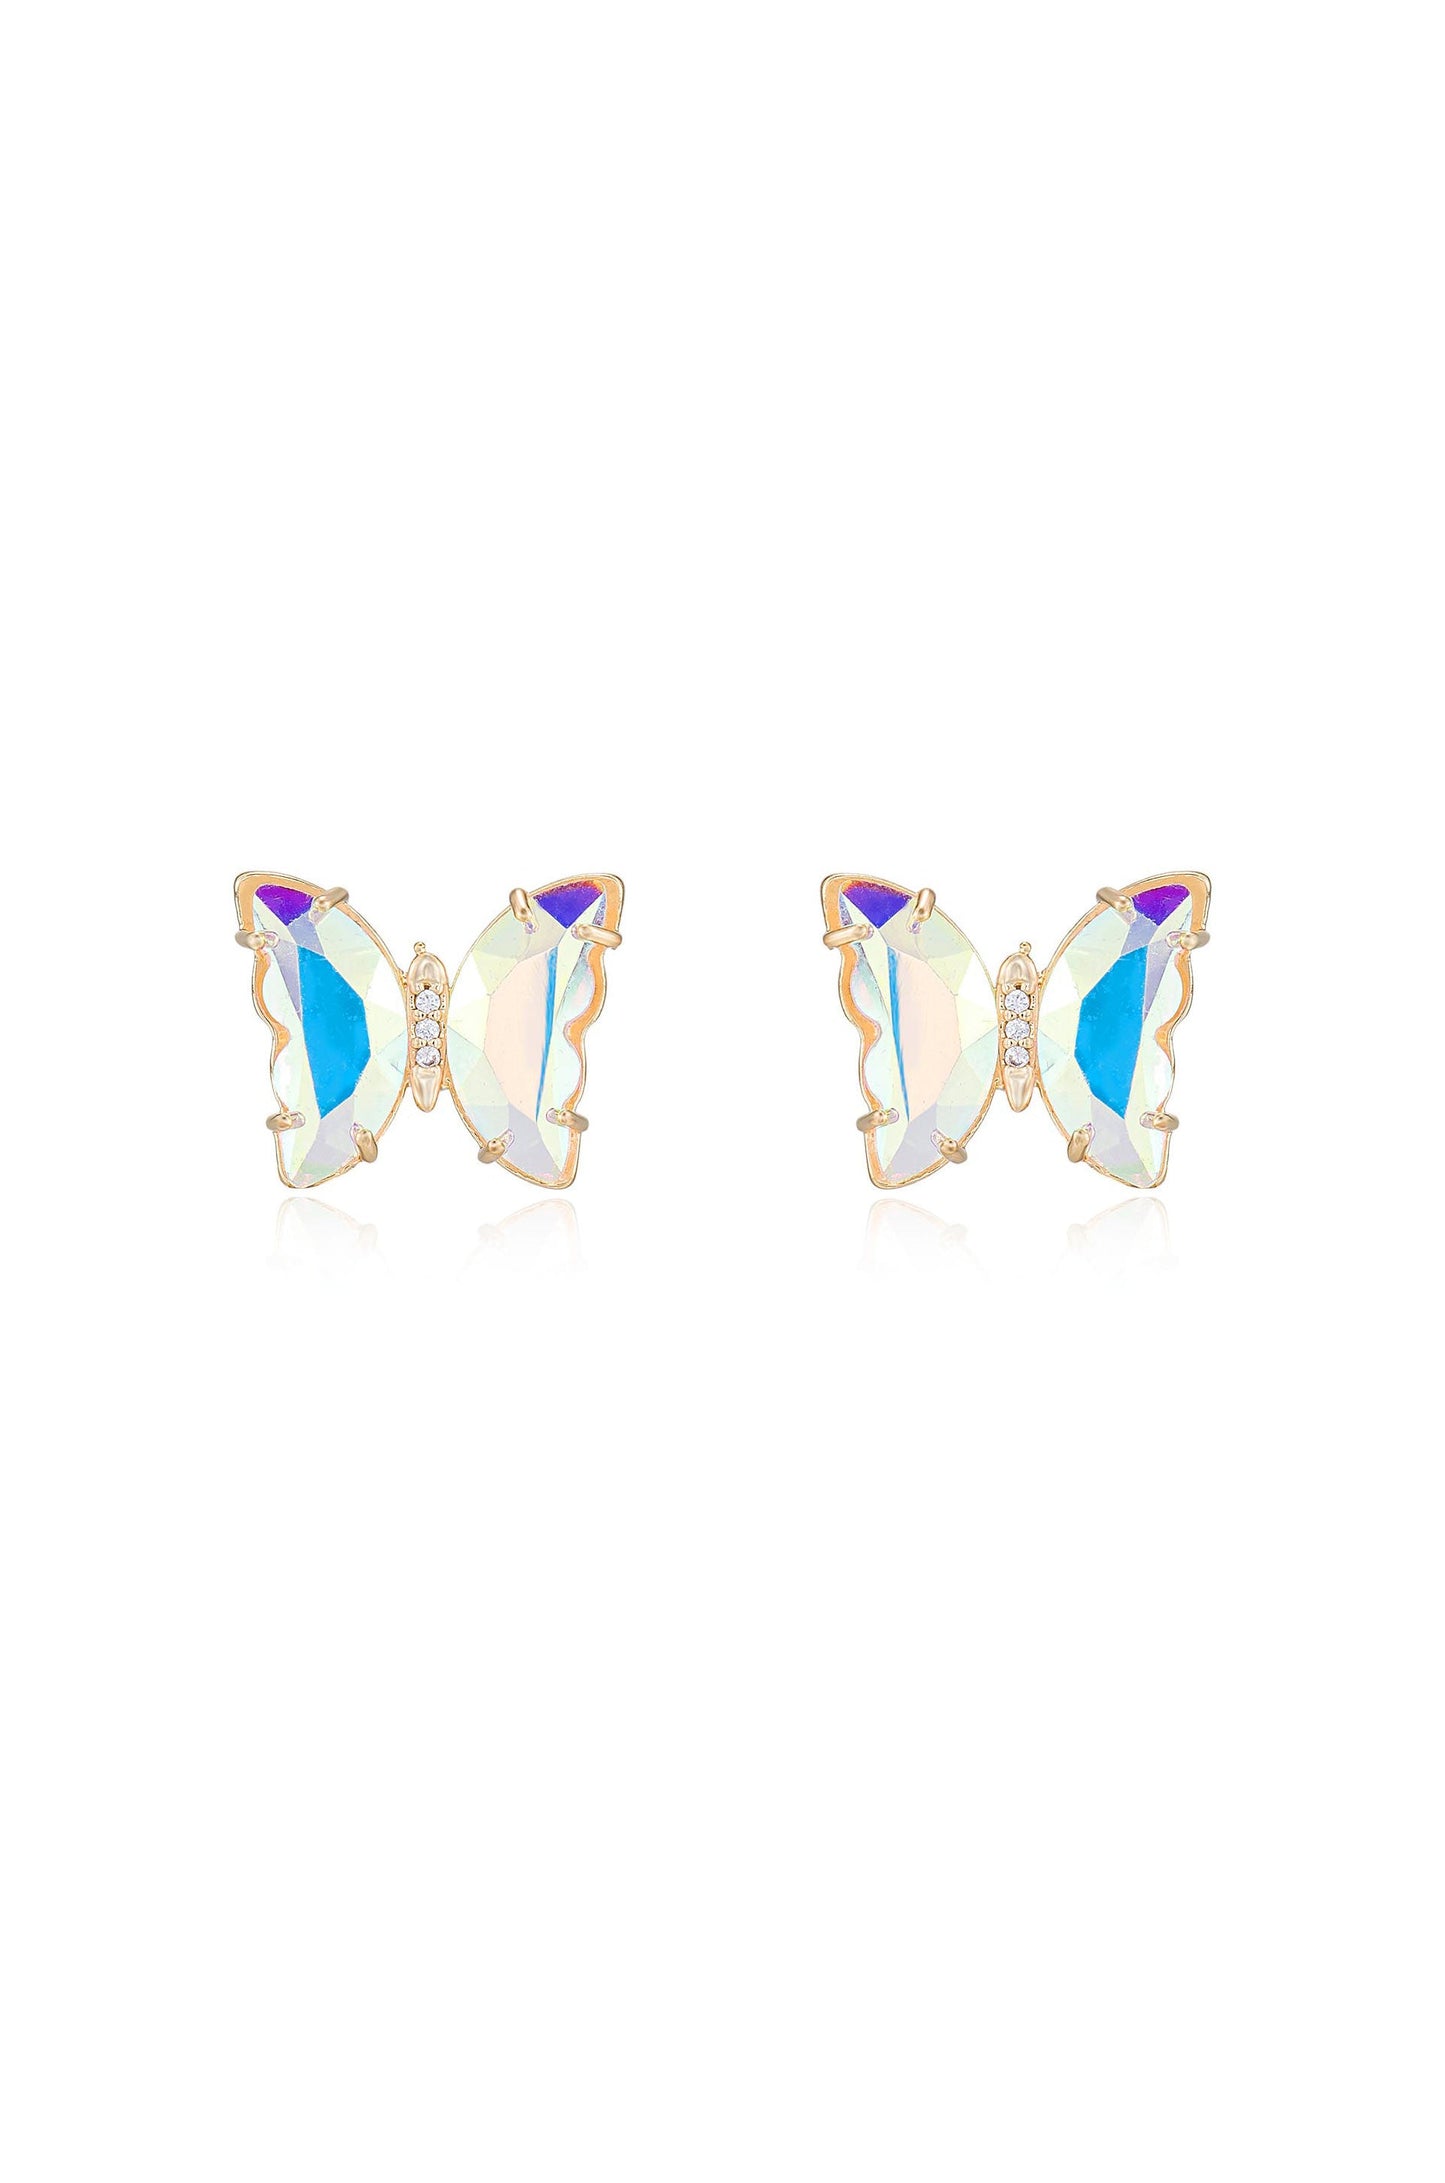 Flutter Away Crystal Earrings - Premium Earrings from Ettika - Just $35! Shop now at Tooksie